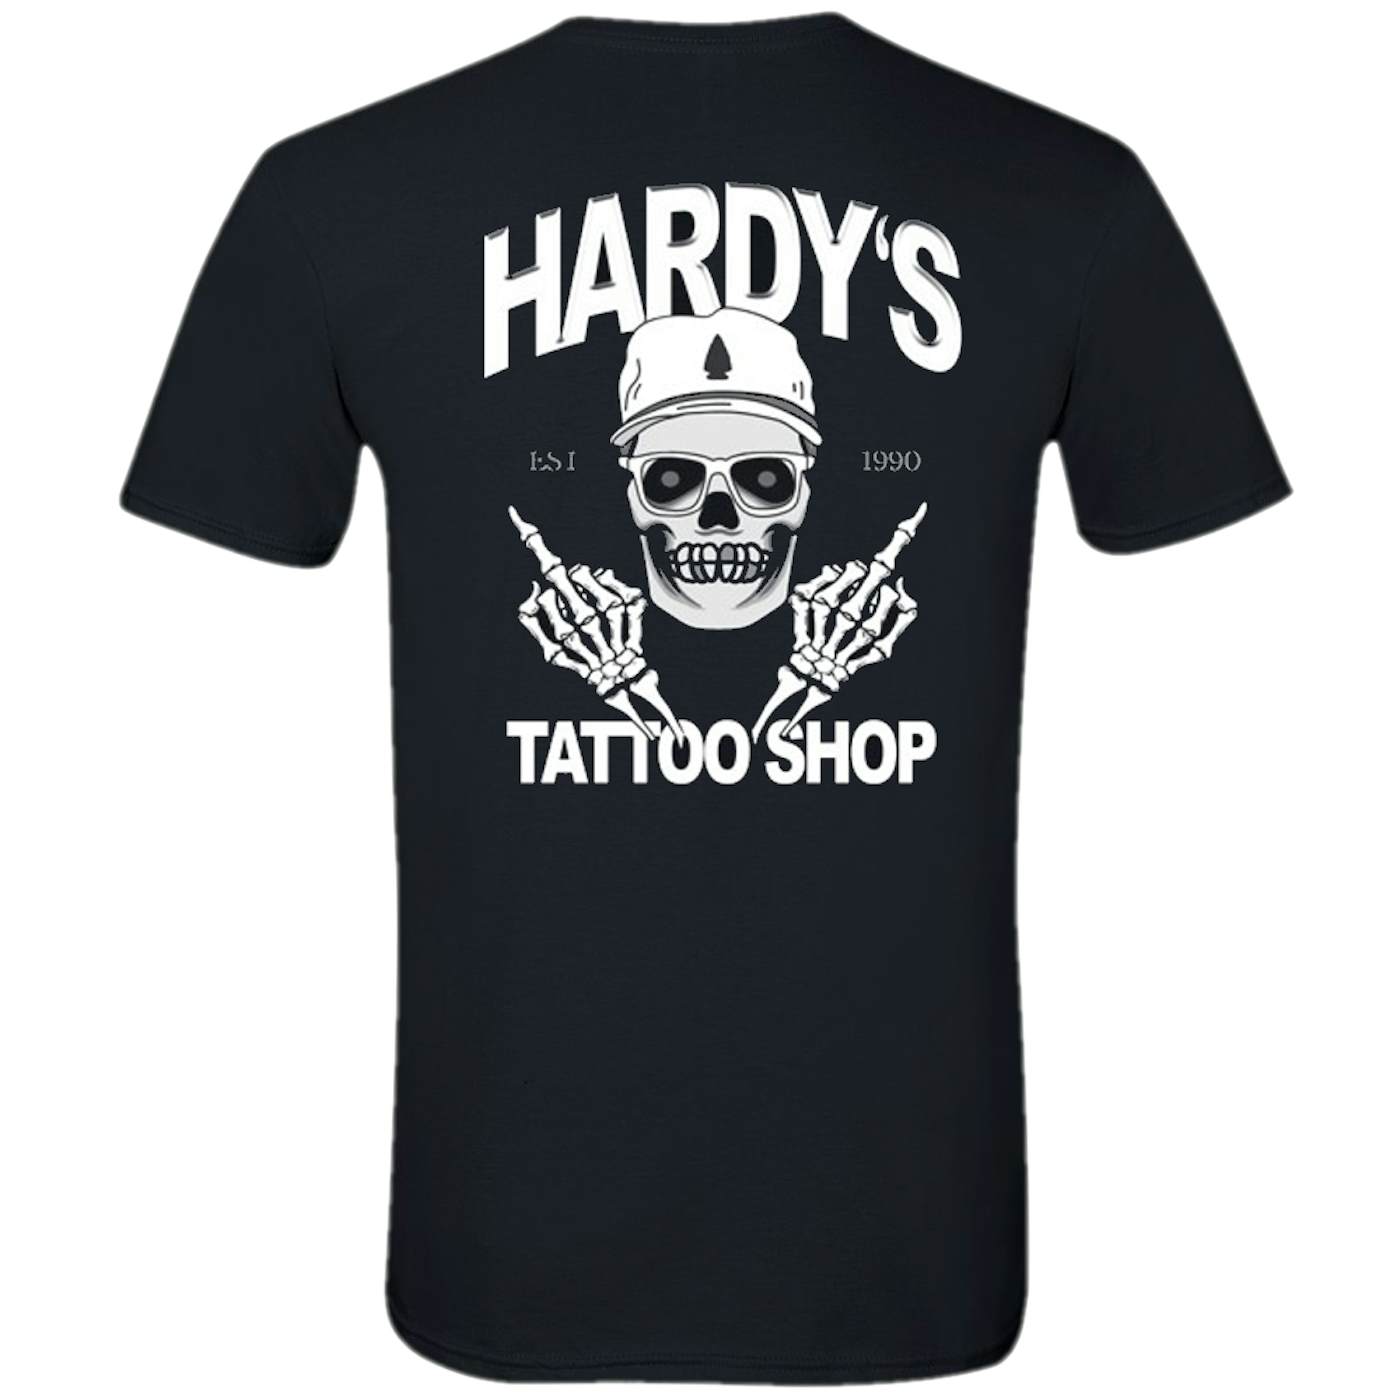 HARDY Tattoo Shop Tee